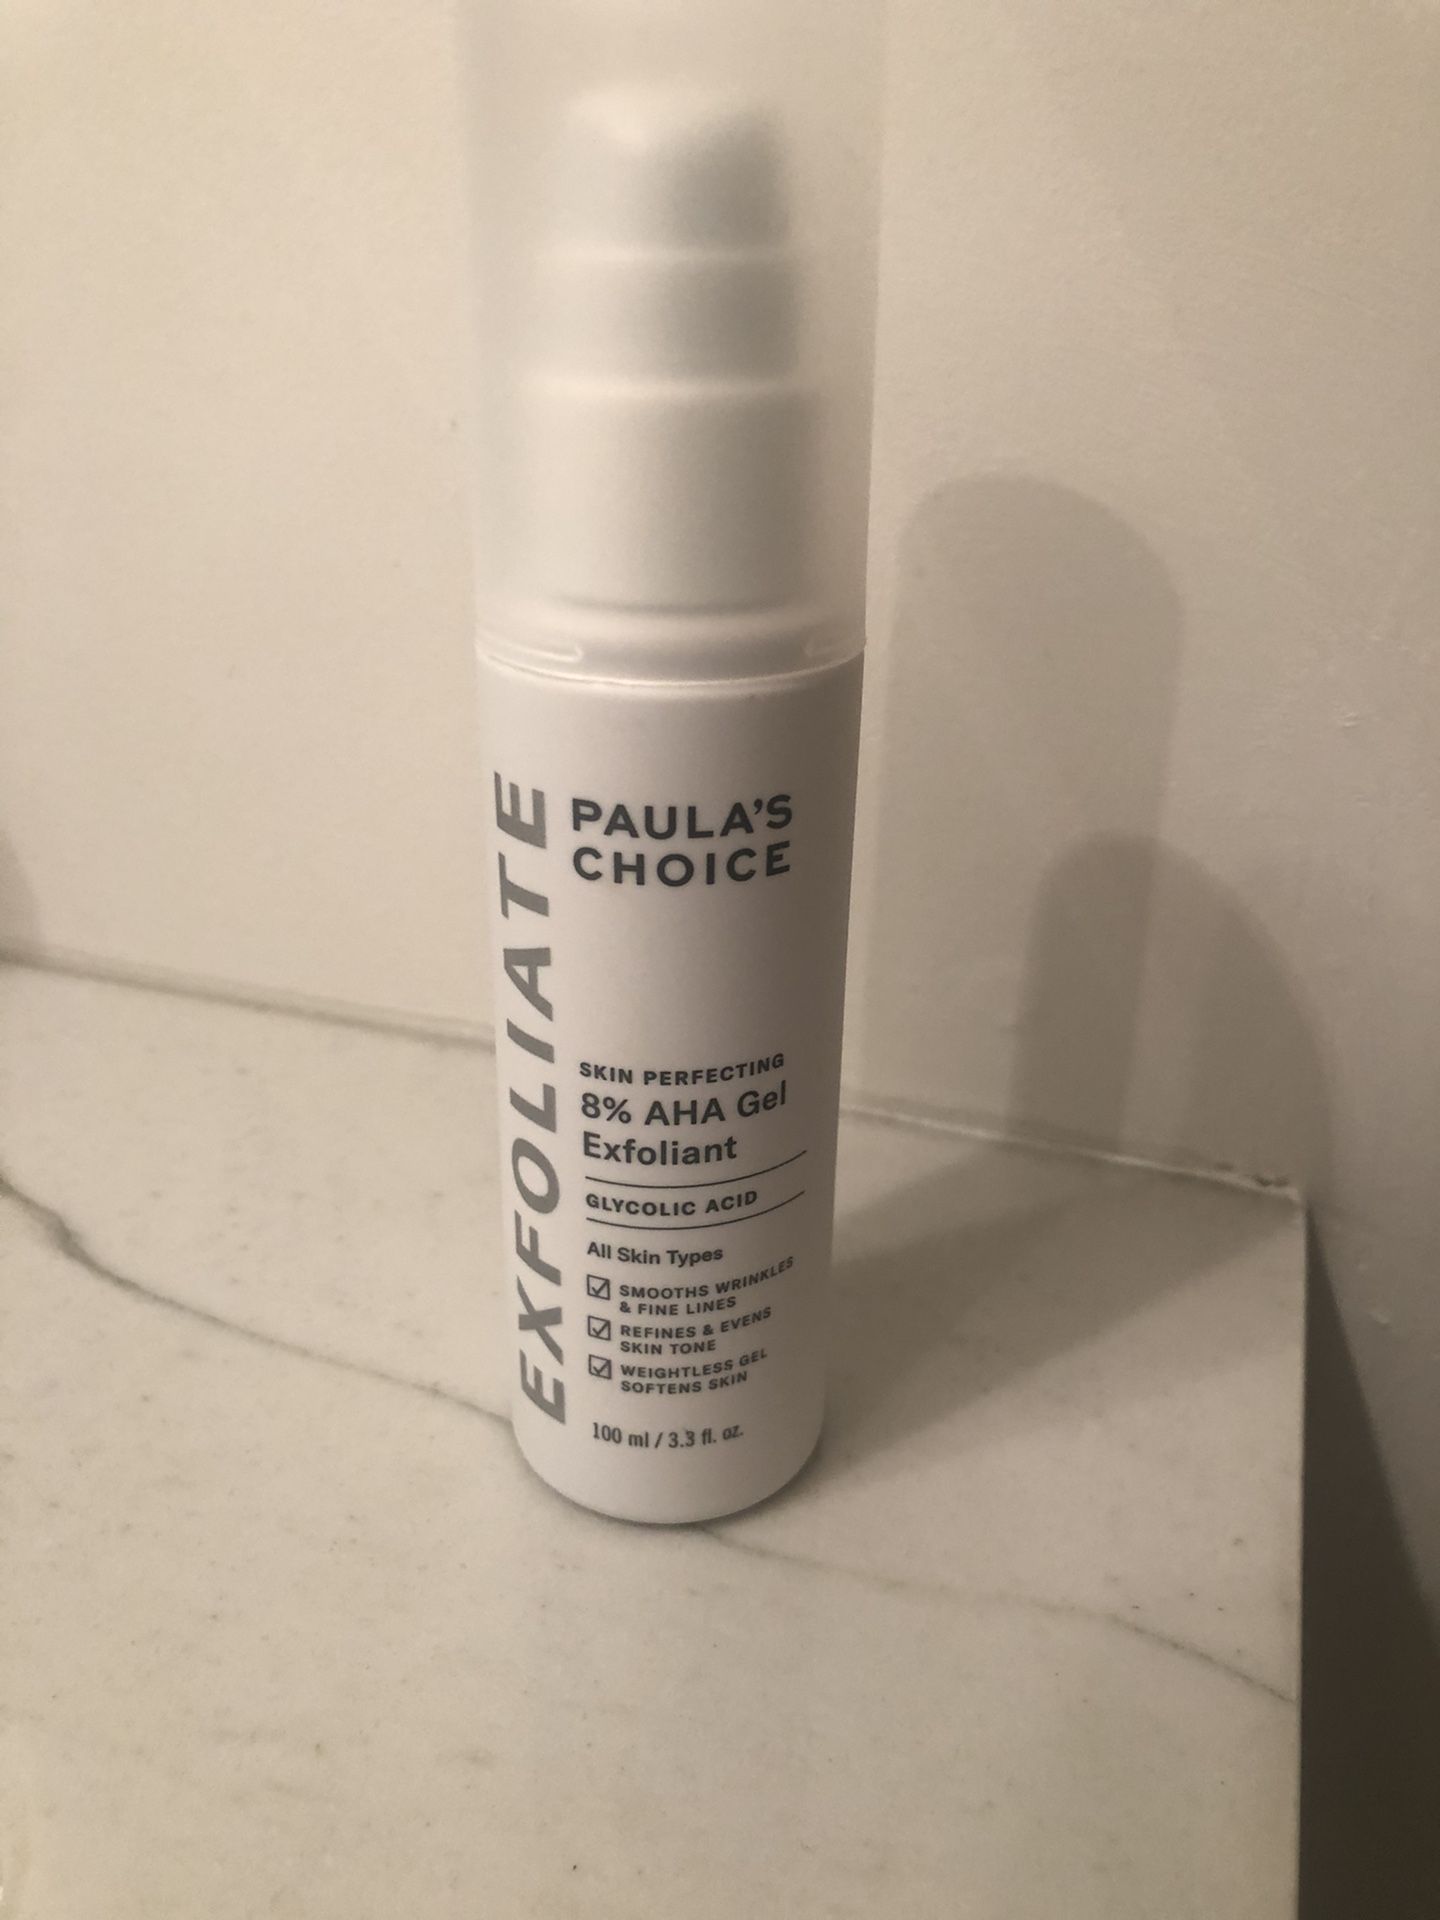 Paula’s Choice skin perfecting 8% aha gel